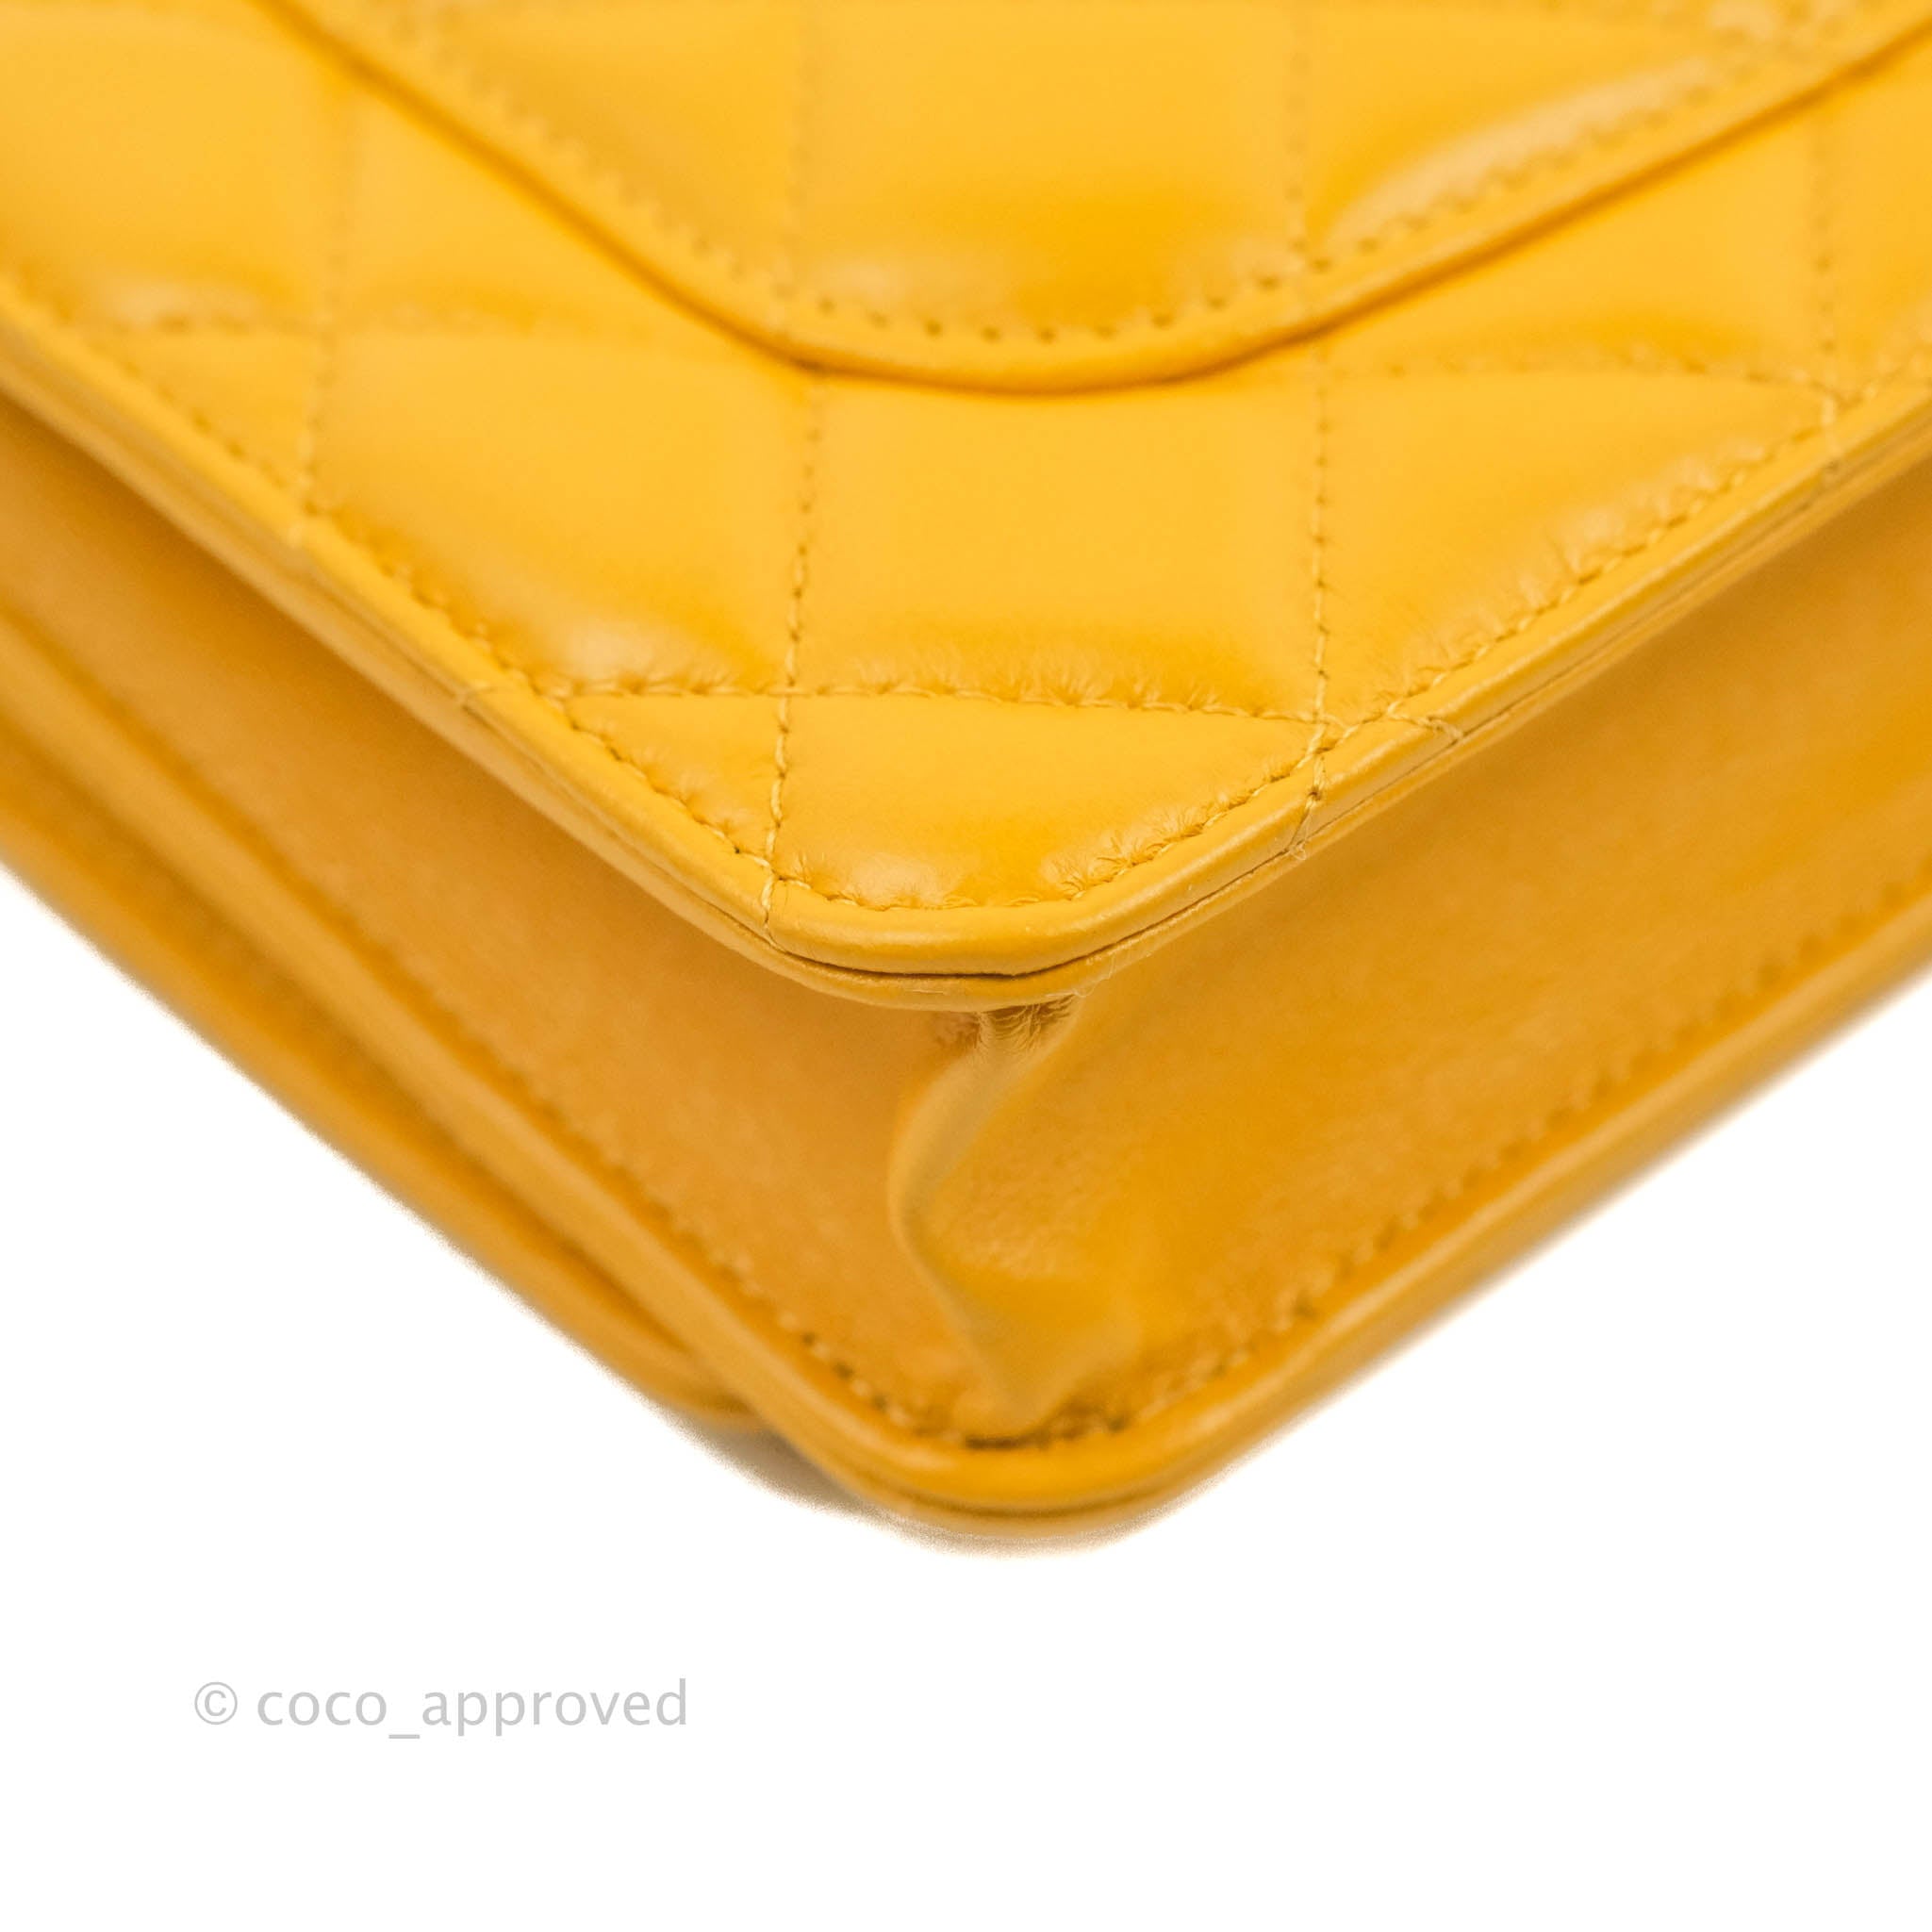 Chanel Yellow Quilted Lambskin Medium Zip-Around Wallet